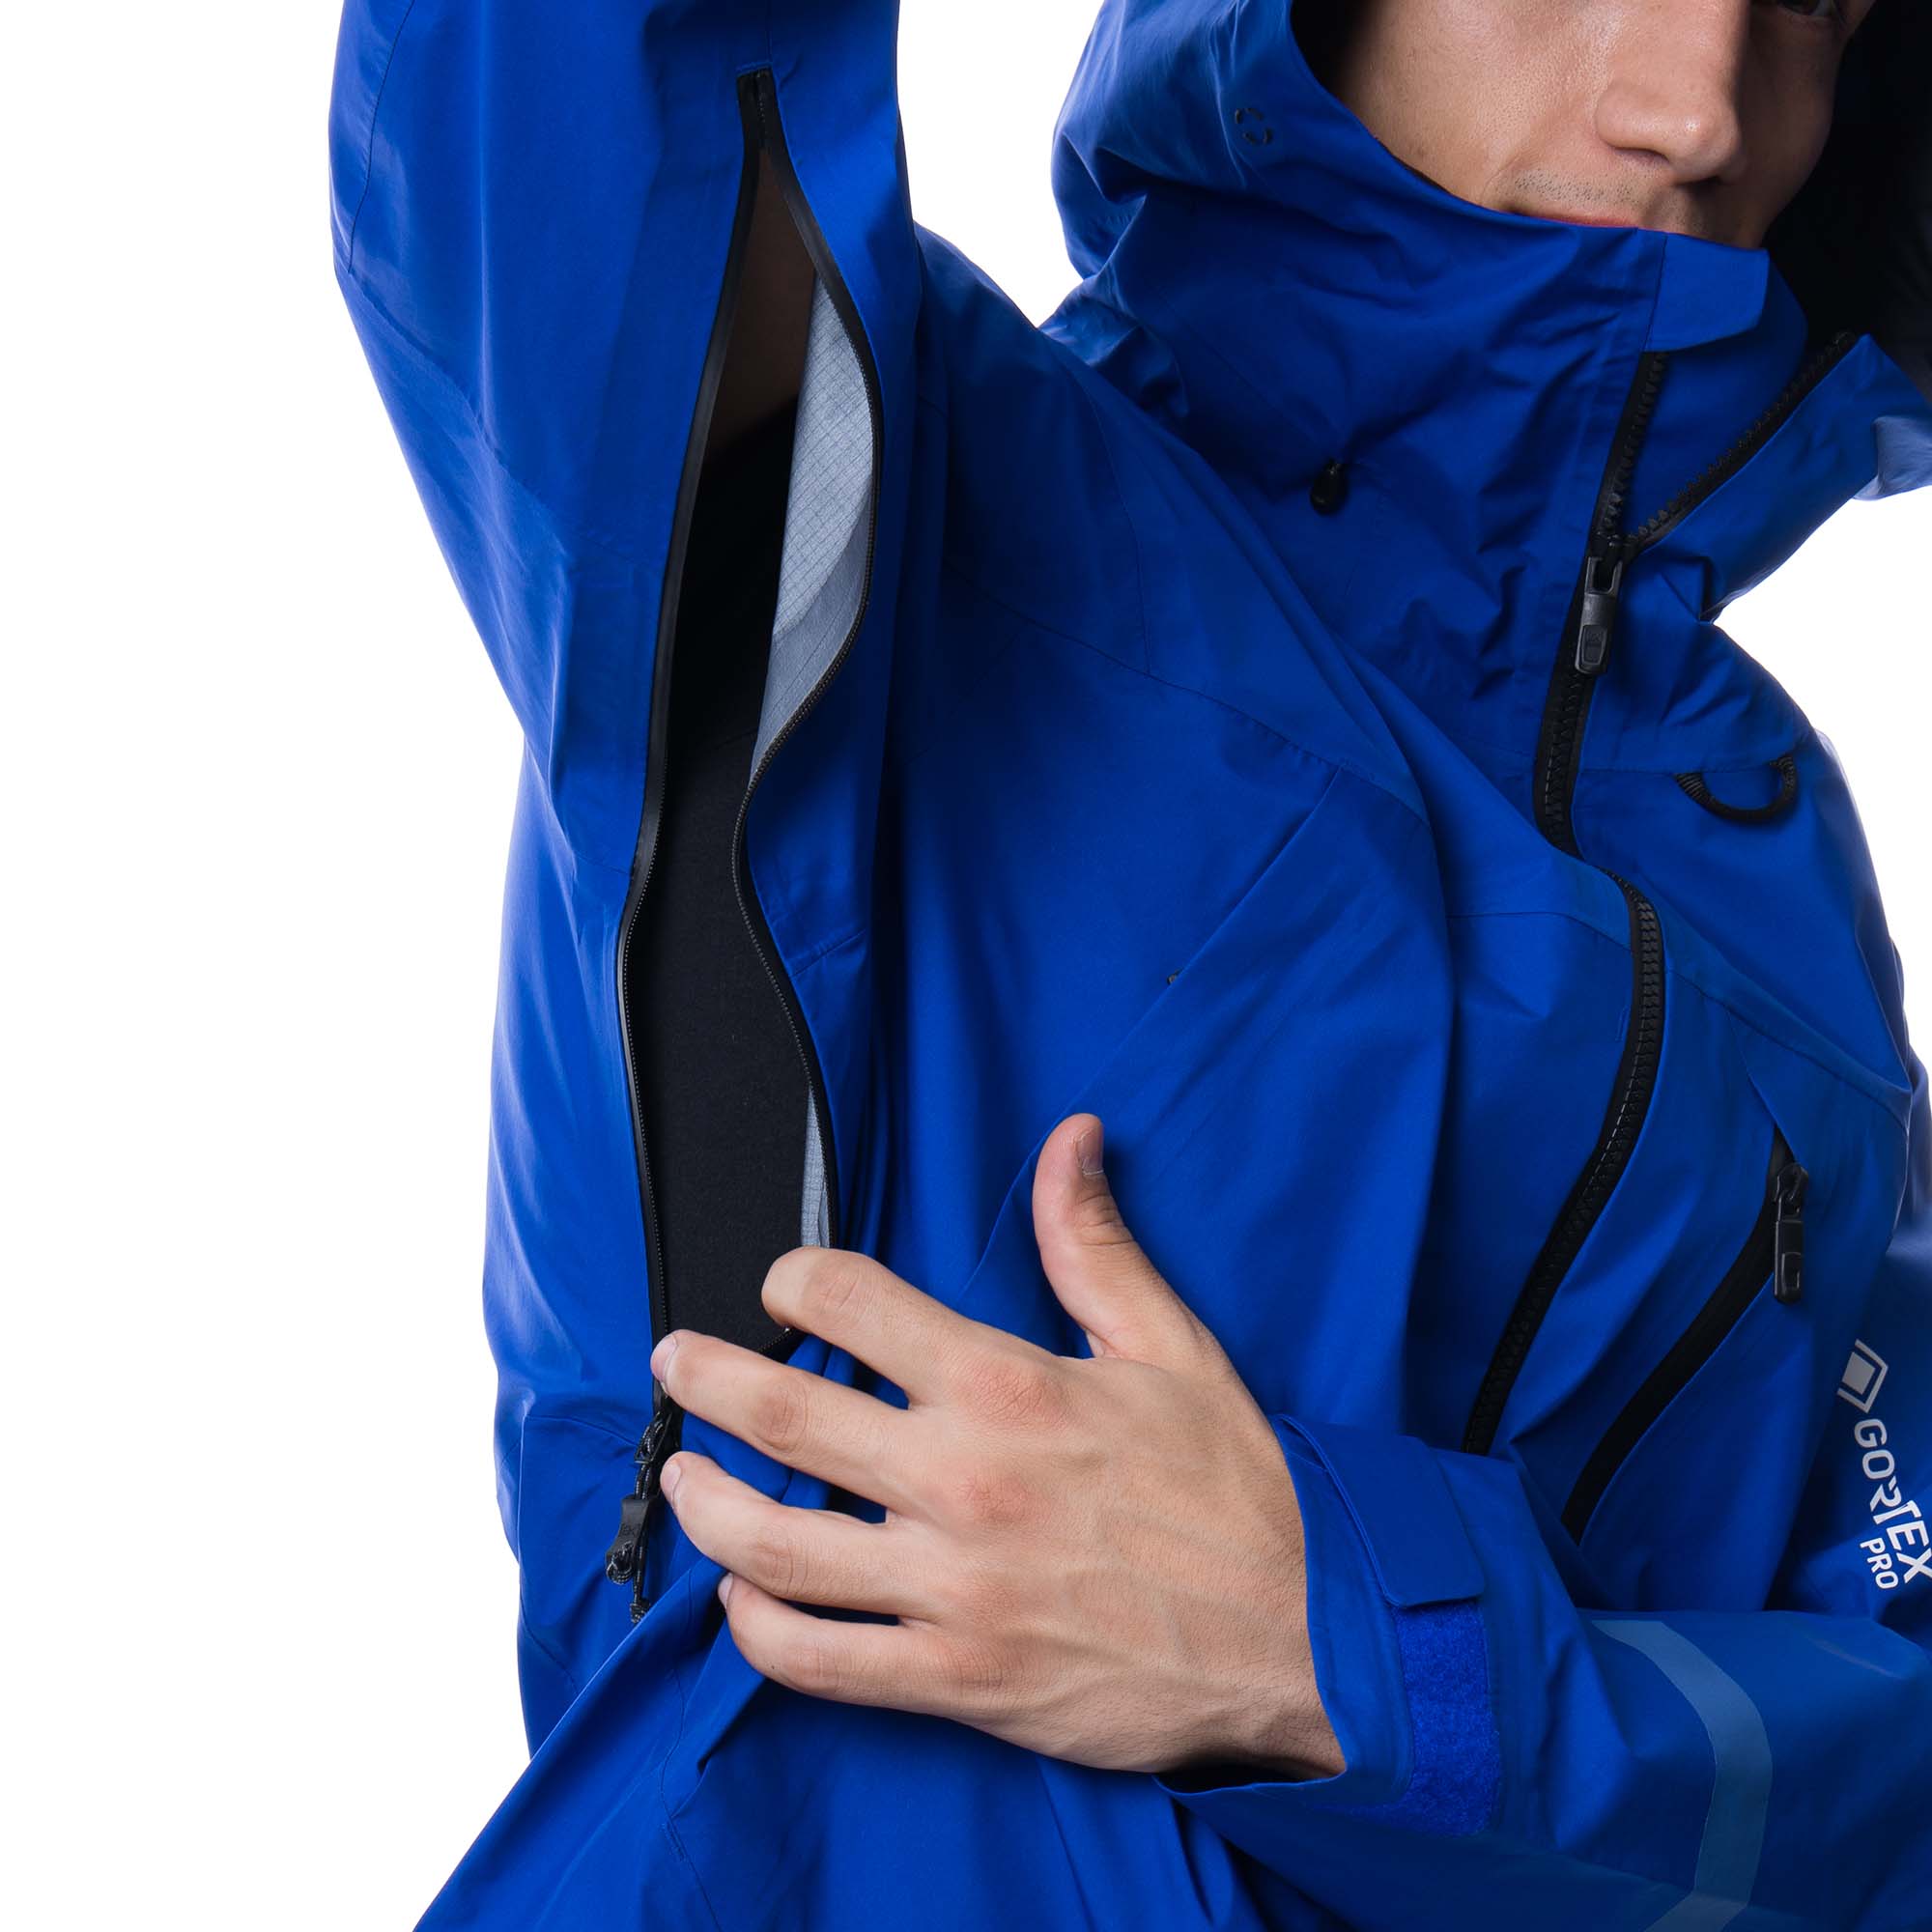 Burton [ak] Tusk Gore-Tex Pro 3L Snowboard & Ski Jacket